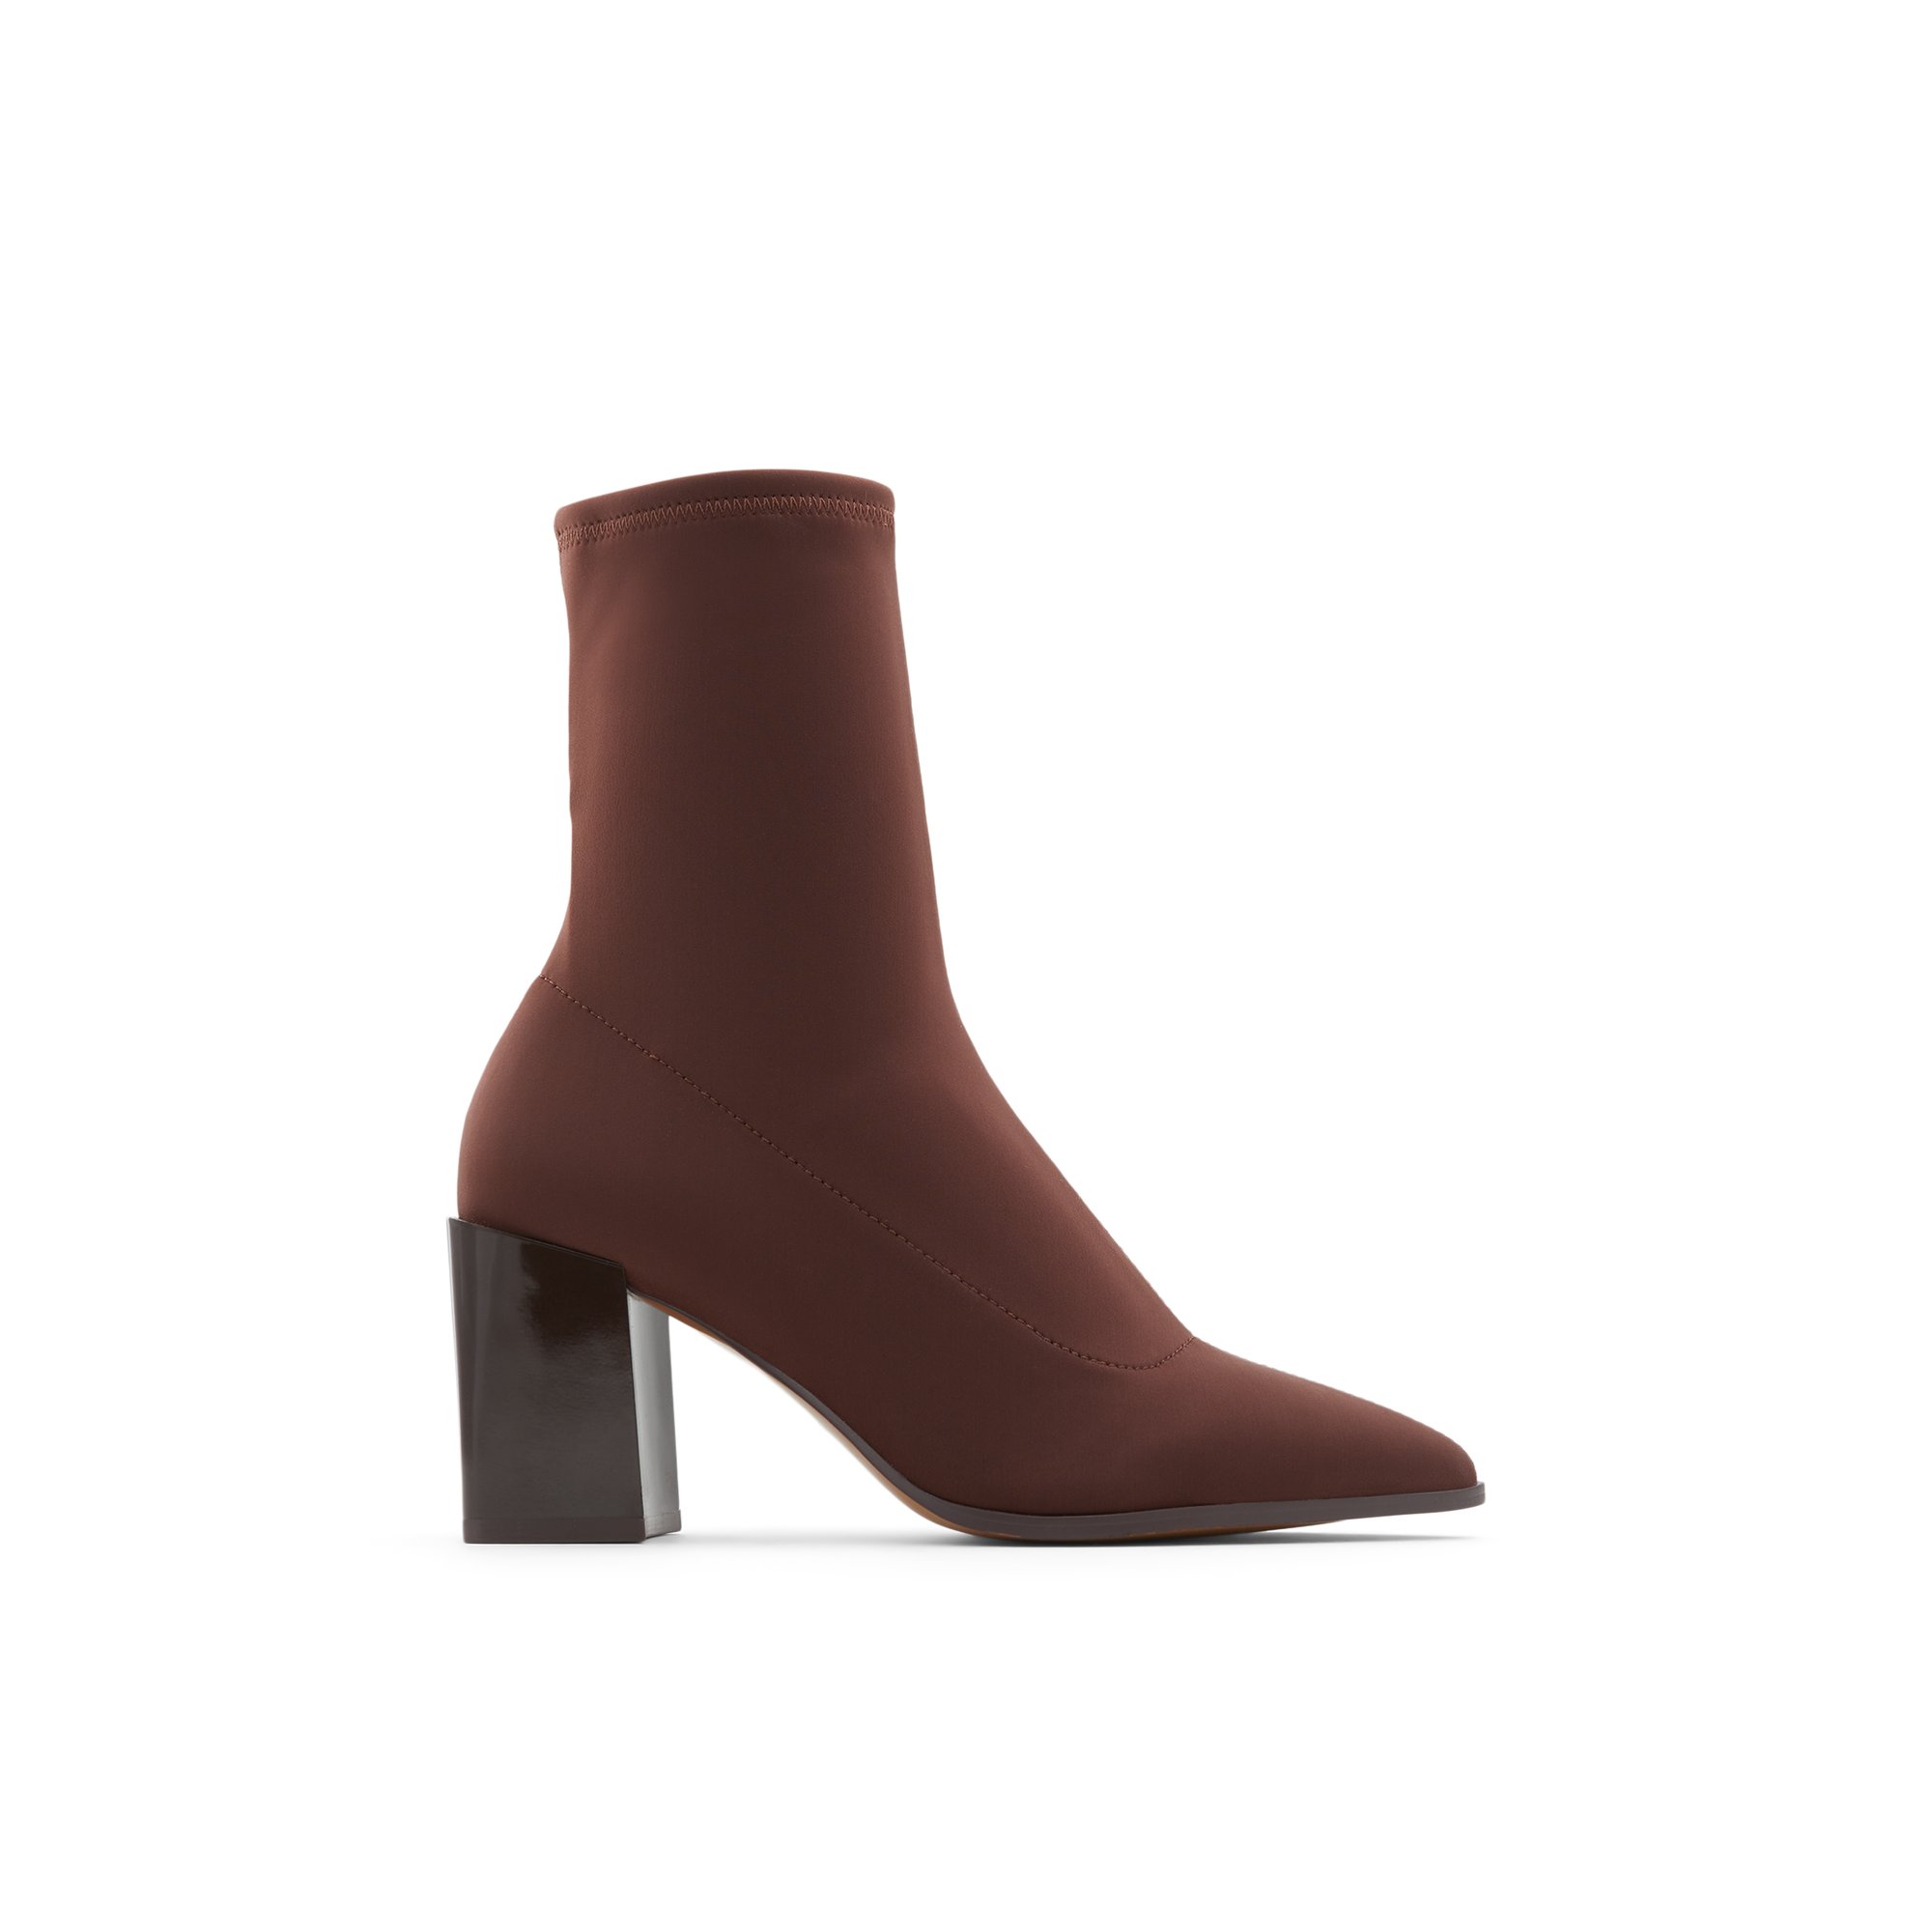 Image of ALDO Adwigocia - Women's Ankle Boot - Brown, Size 8